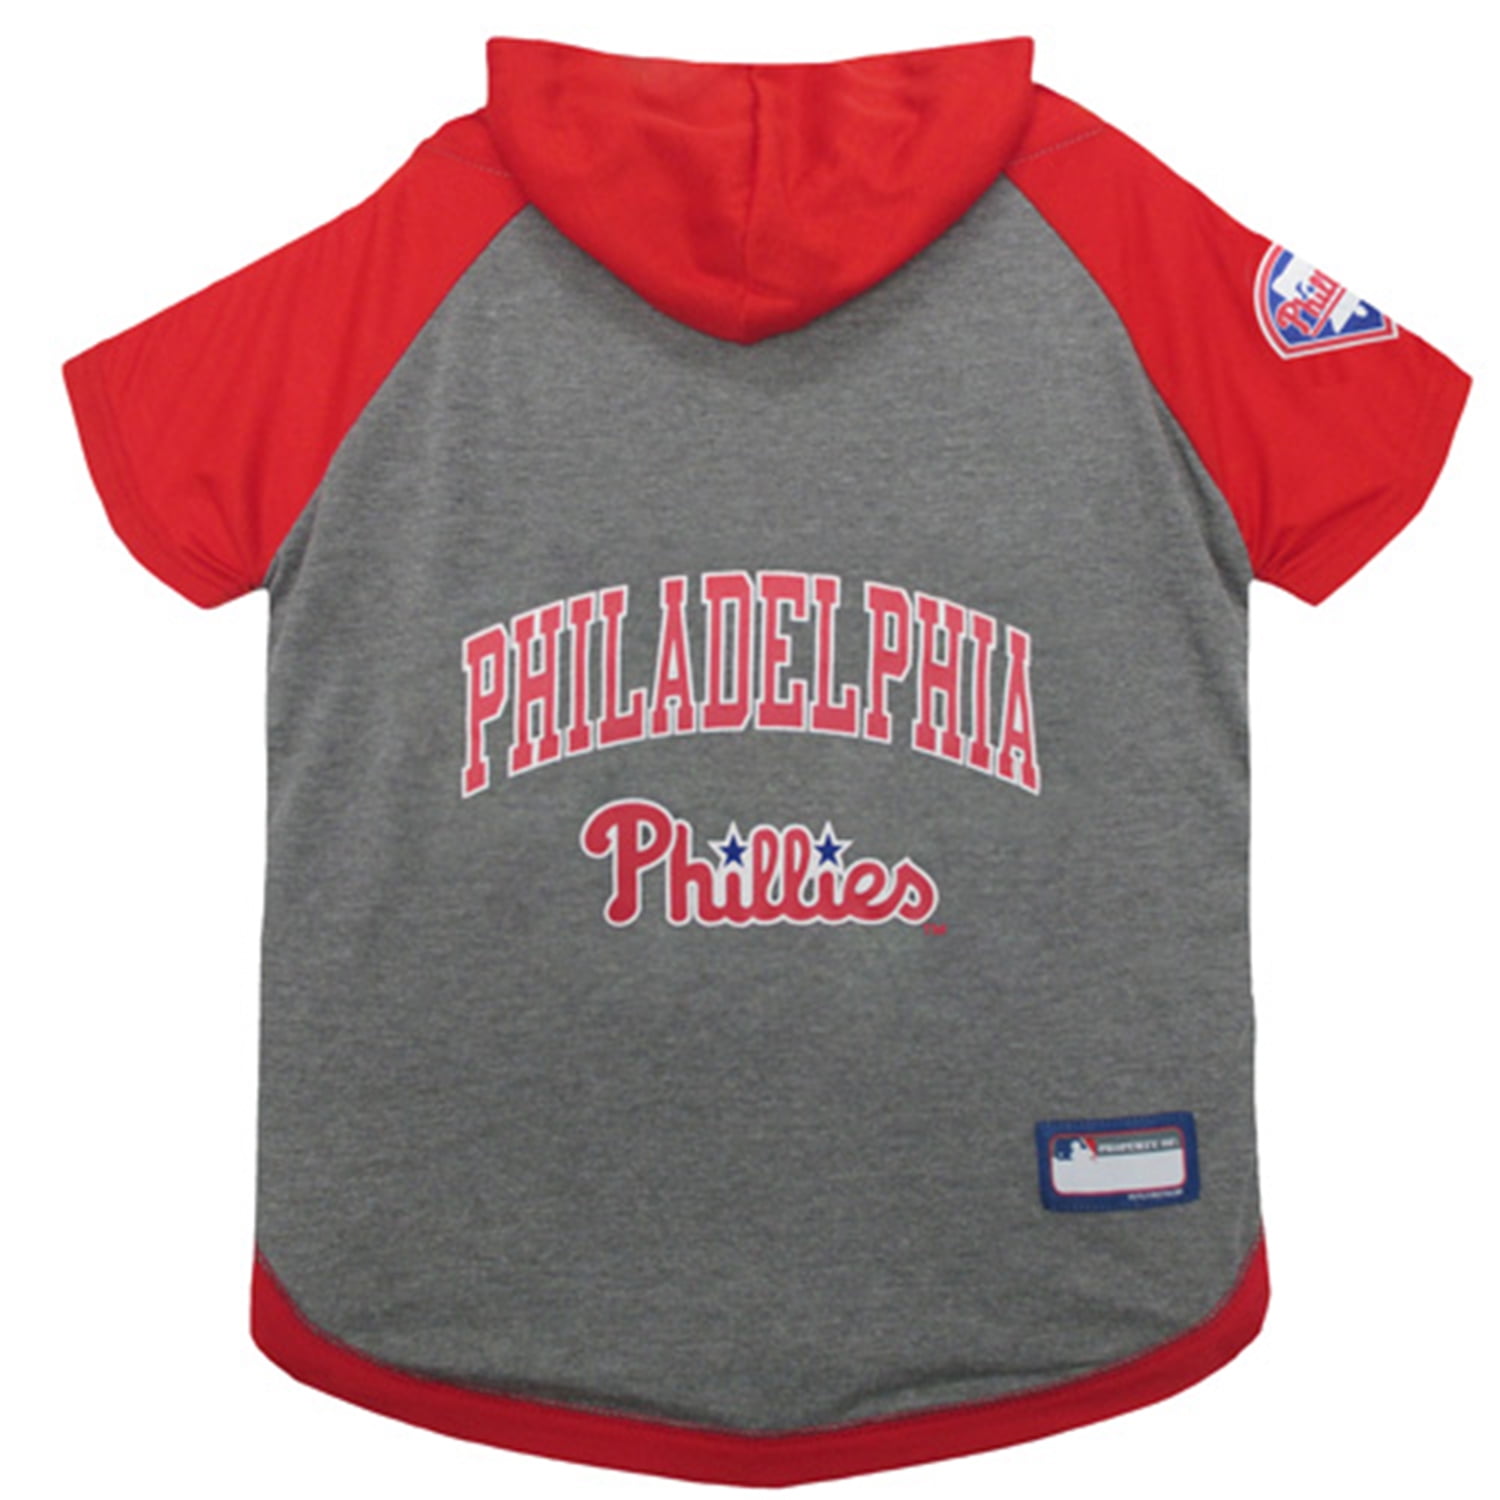 Officially Licensed MLB Philadelphia Phillies Jersey